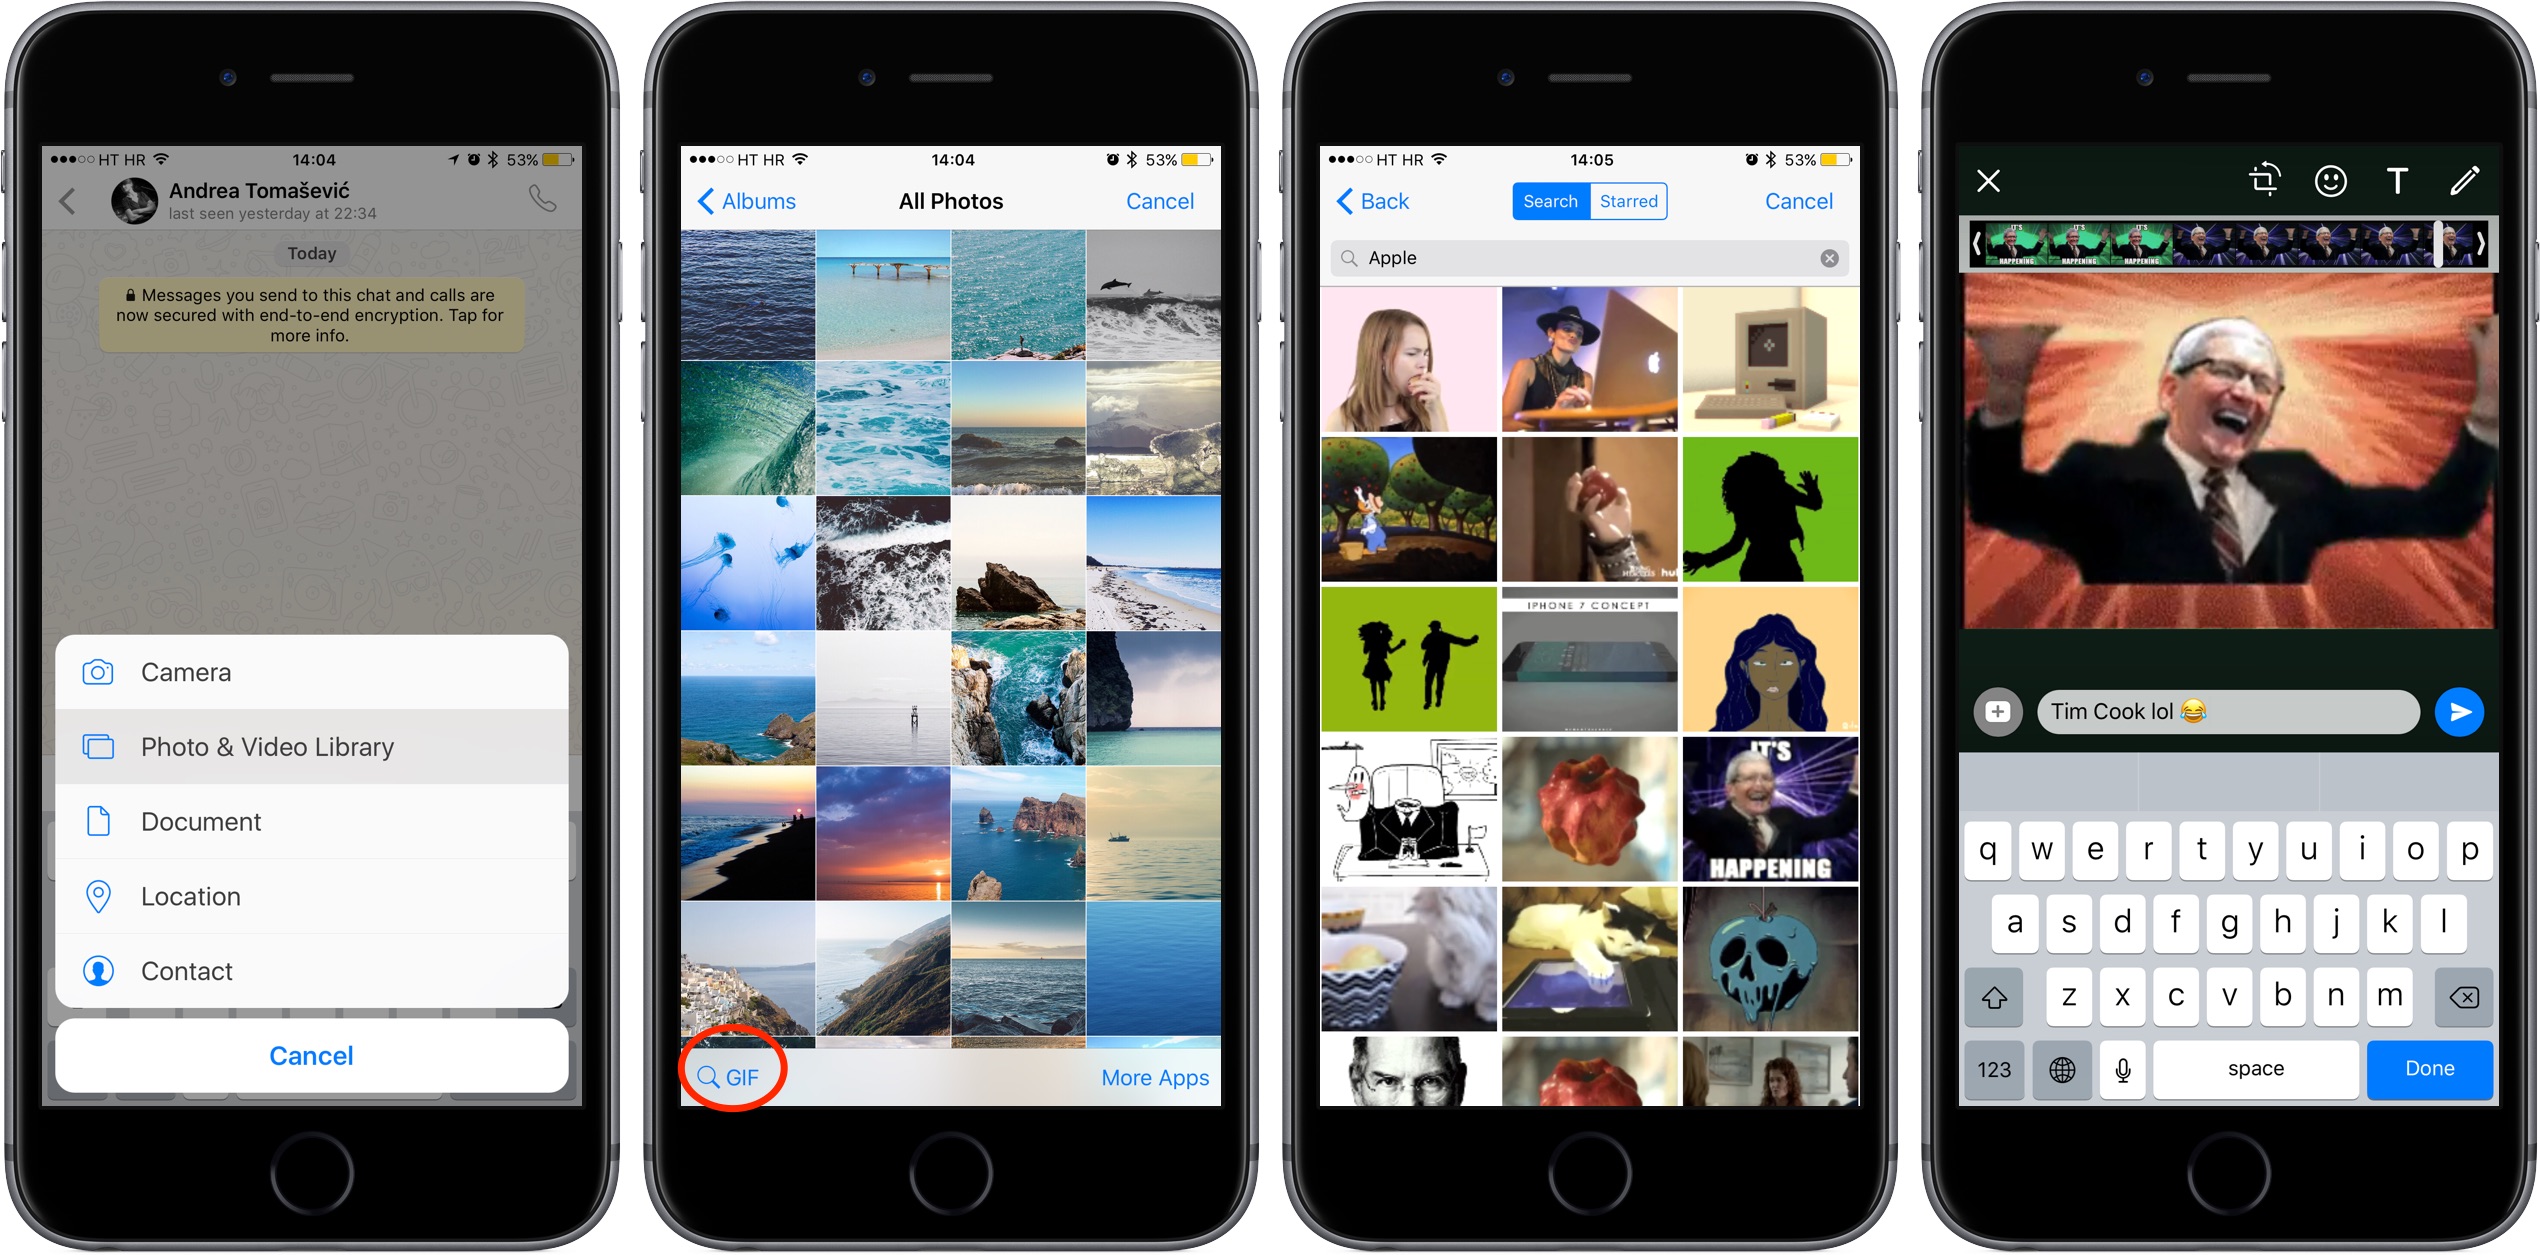 WhatsApp 2.16.16 for iOS GIF search button iPHone screenshot 001